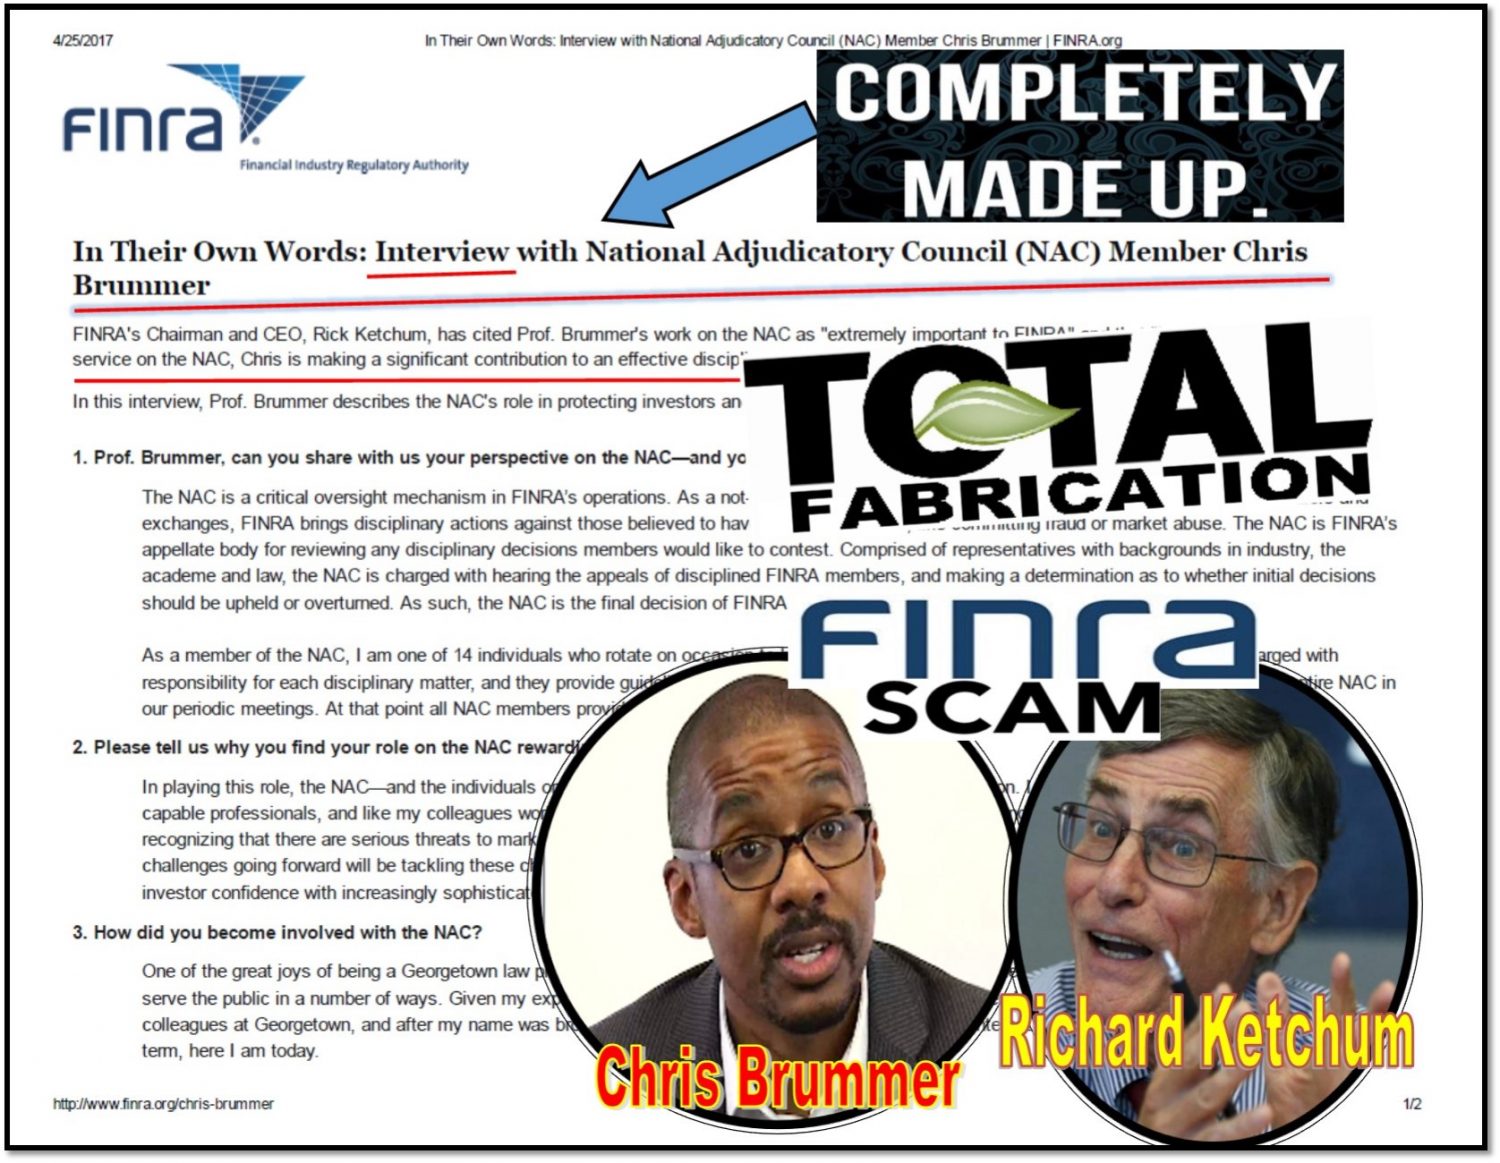 BRREAKING NEWS, FINRA Put Up Fake NAC Member Chris Brummer Interview on Official Site, Former CEO Richard Ketchum Caught Whitewashing Rigged FINRA NAC Hearings